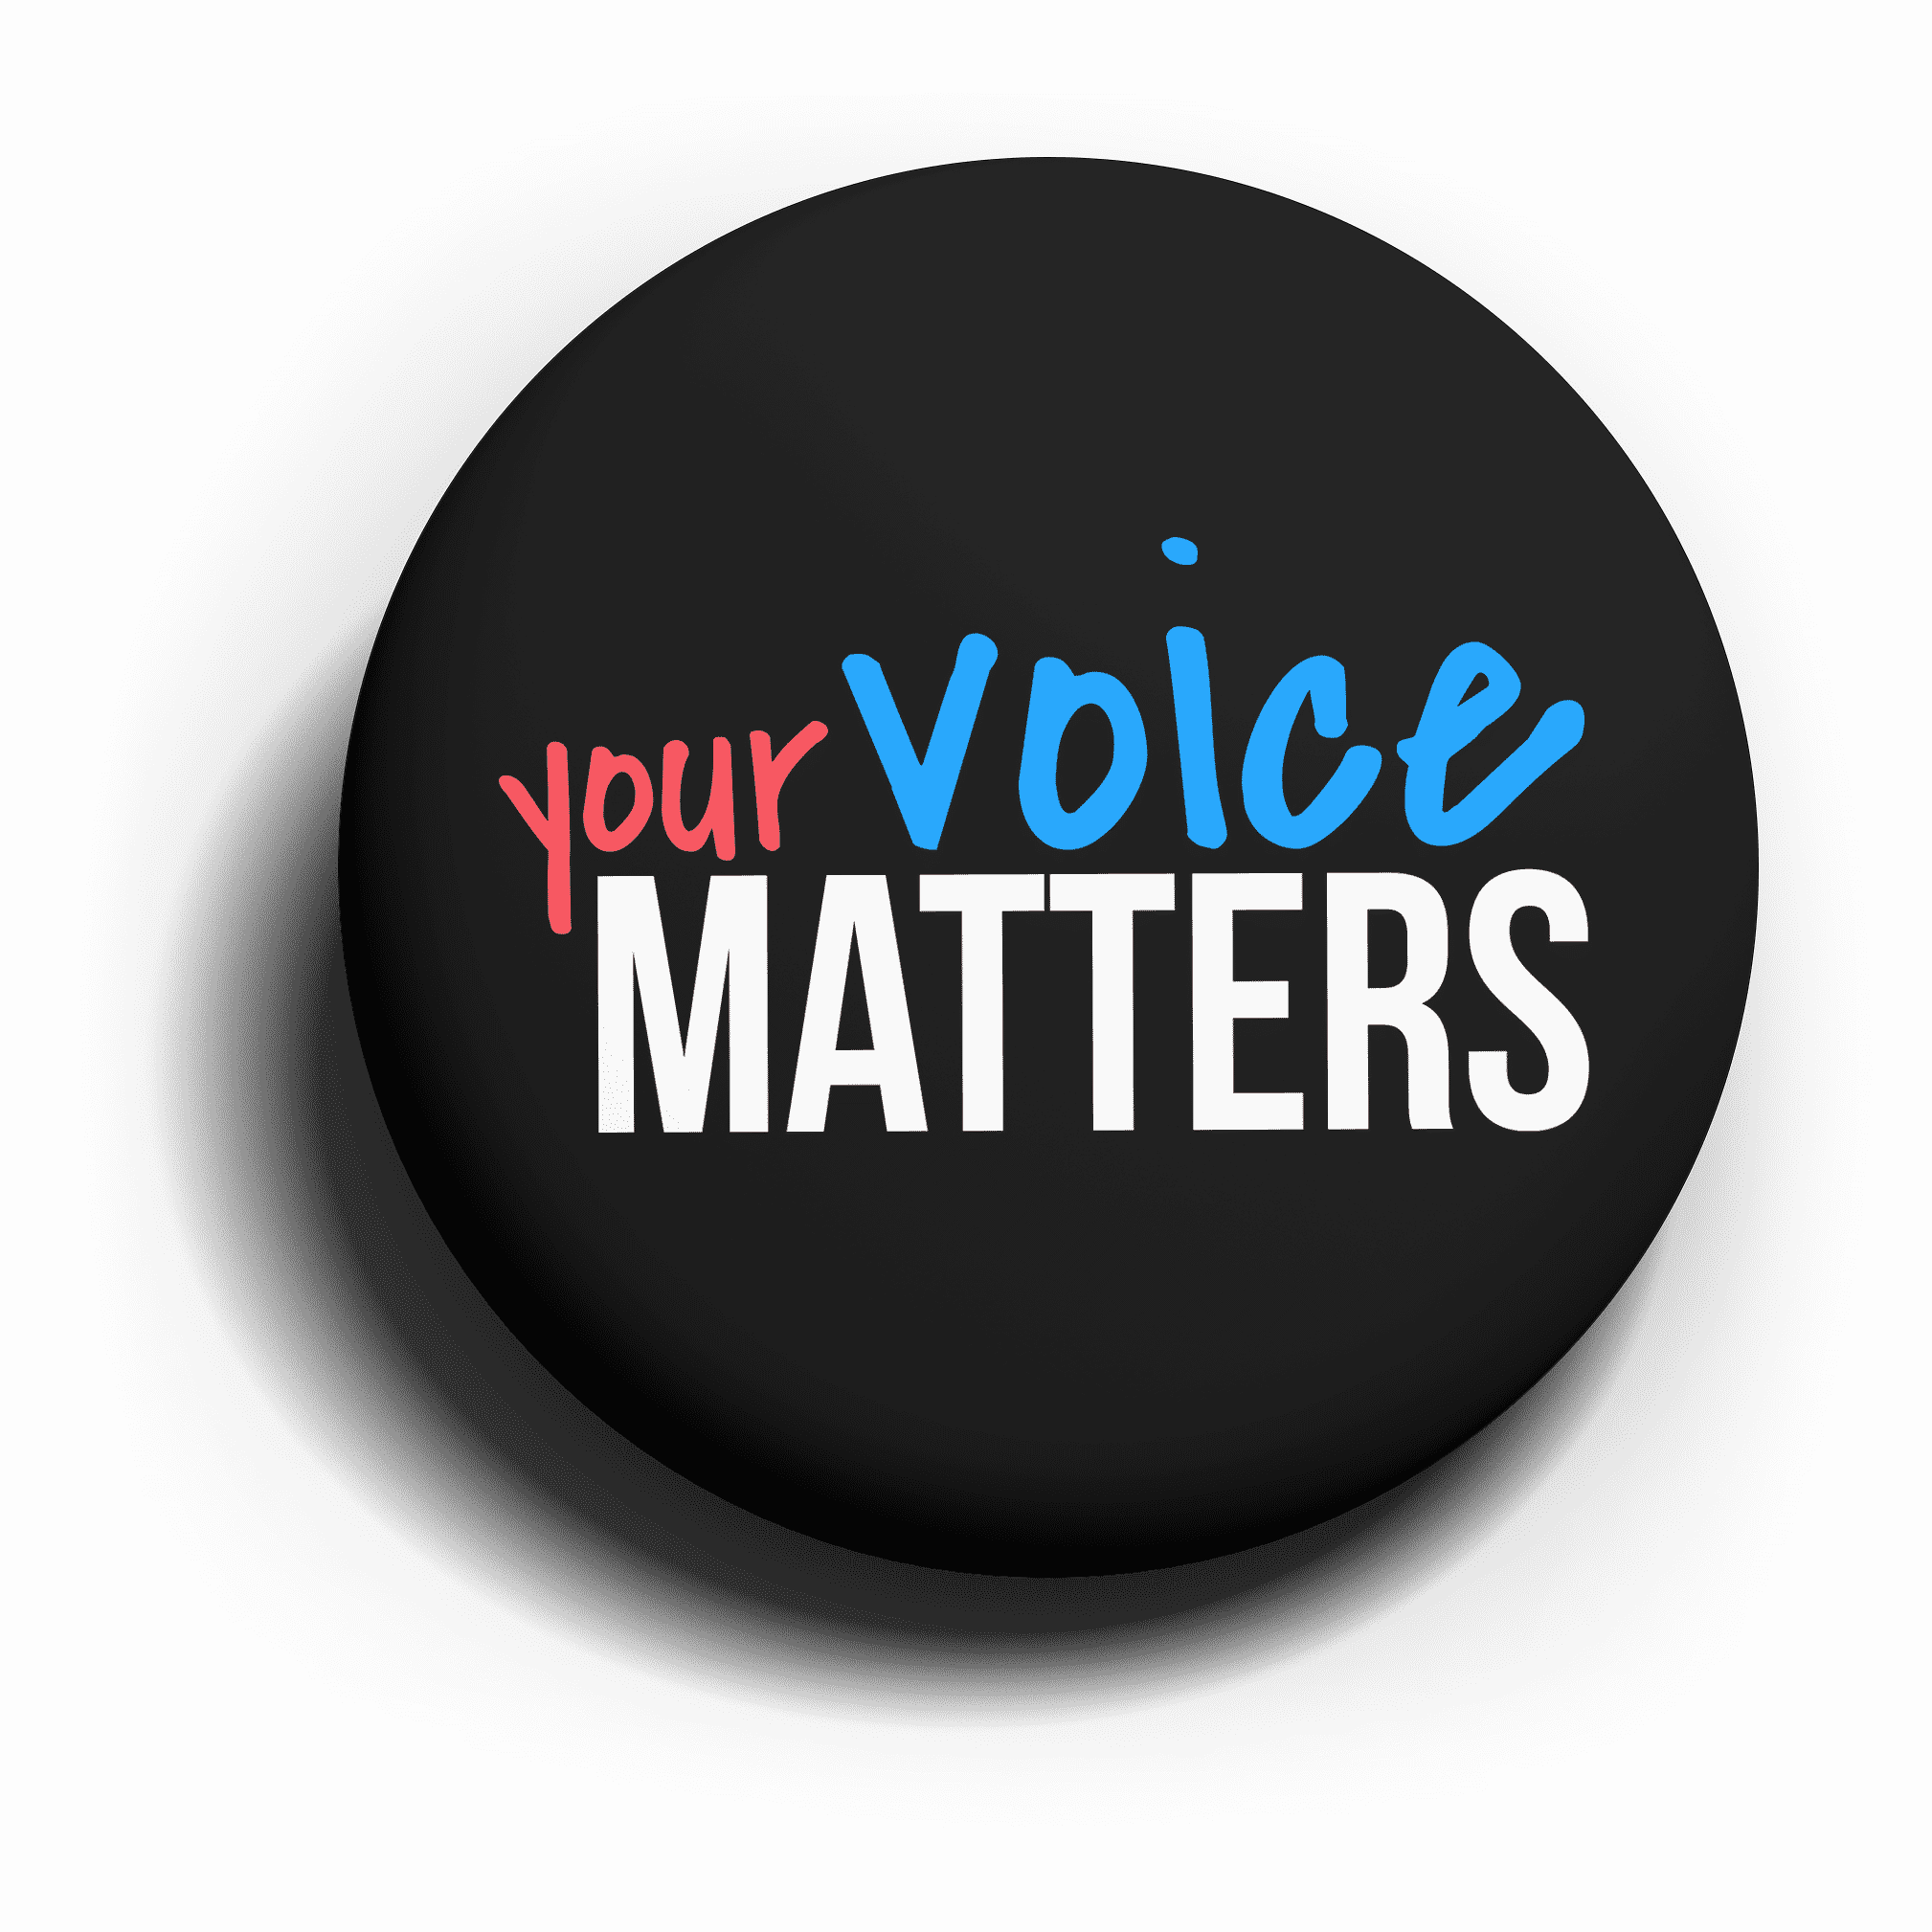 (Vote) Your Voice Matters